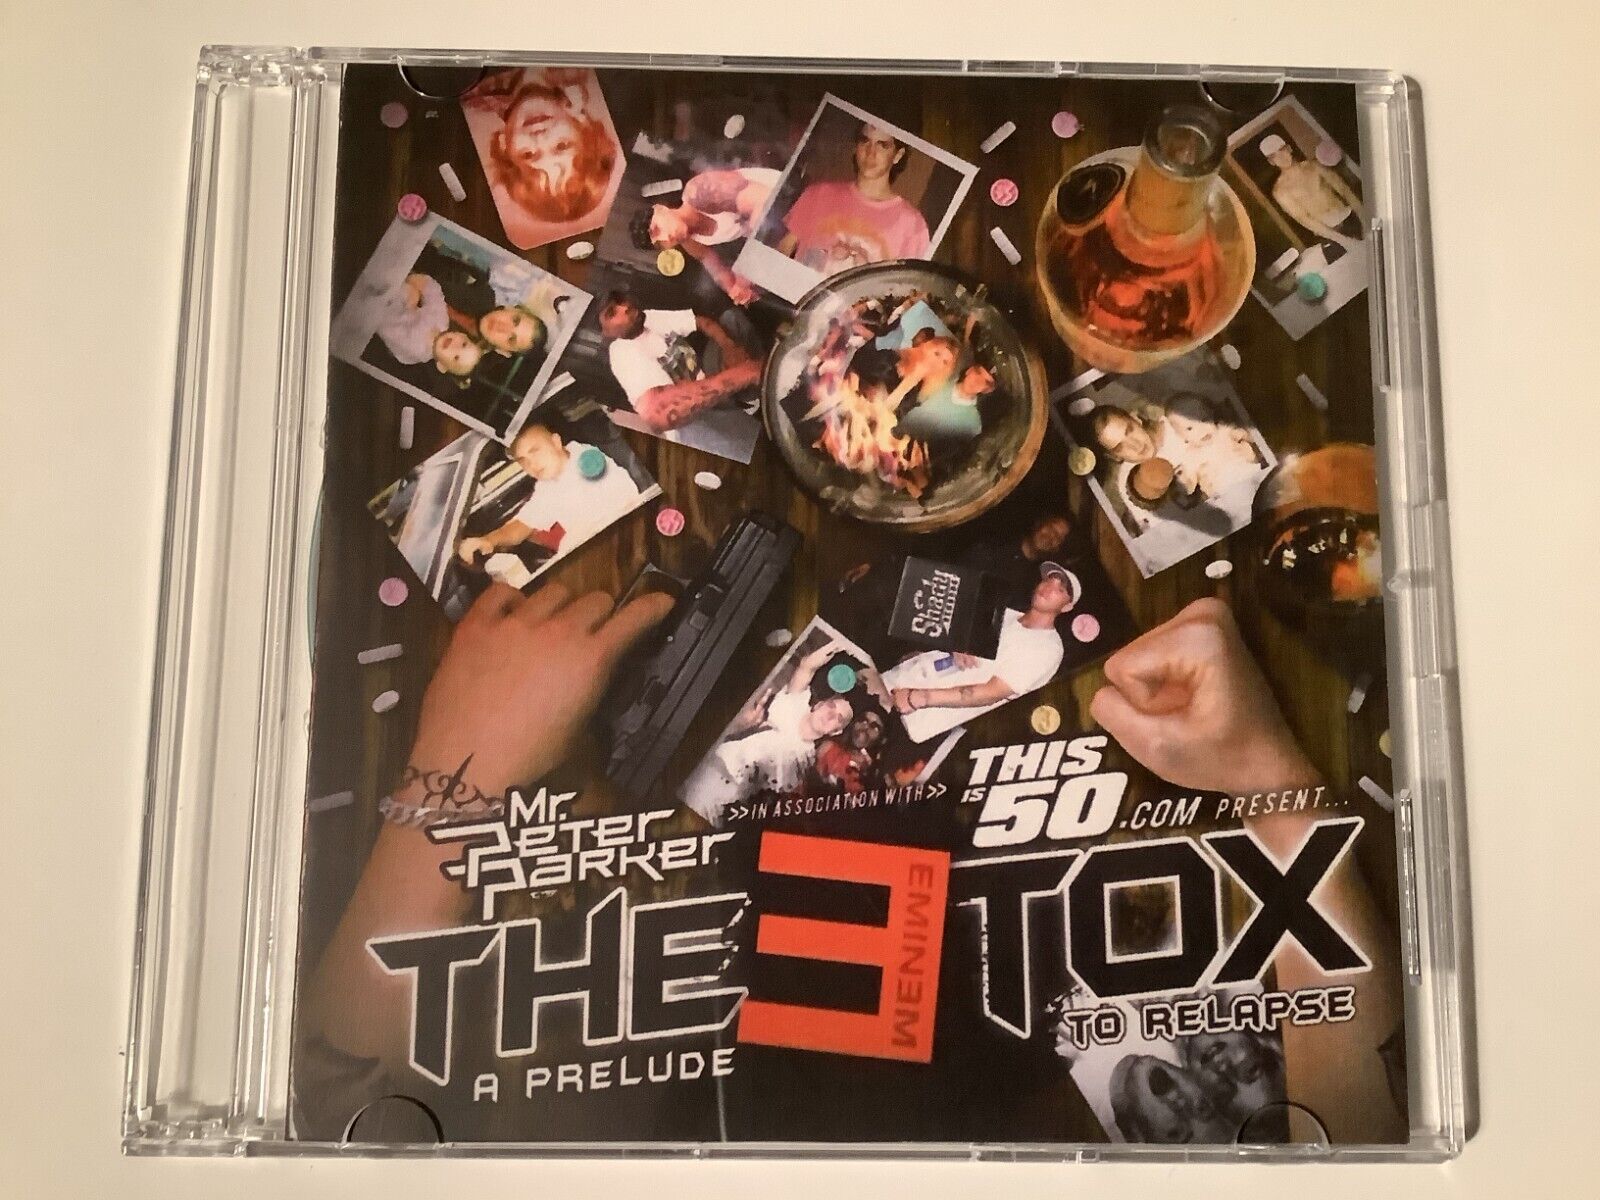 Eminem - E-Tox (A Prelude To Relapse) CD Rare Promo 2009 Mixtape dj peter parker